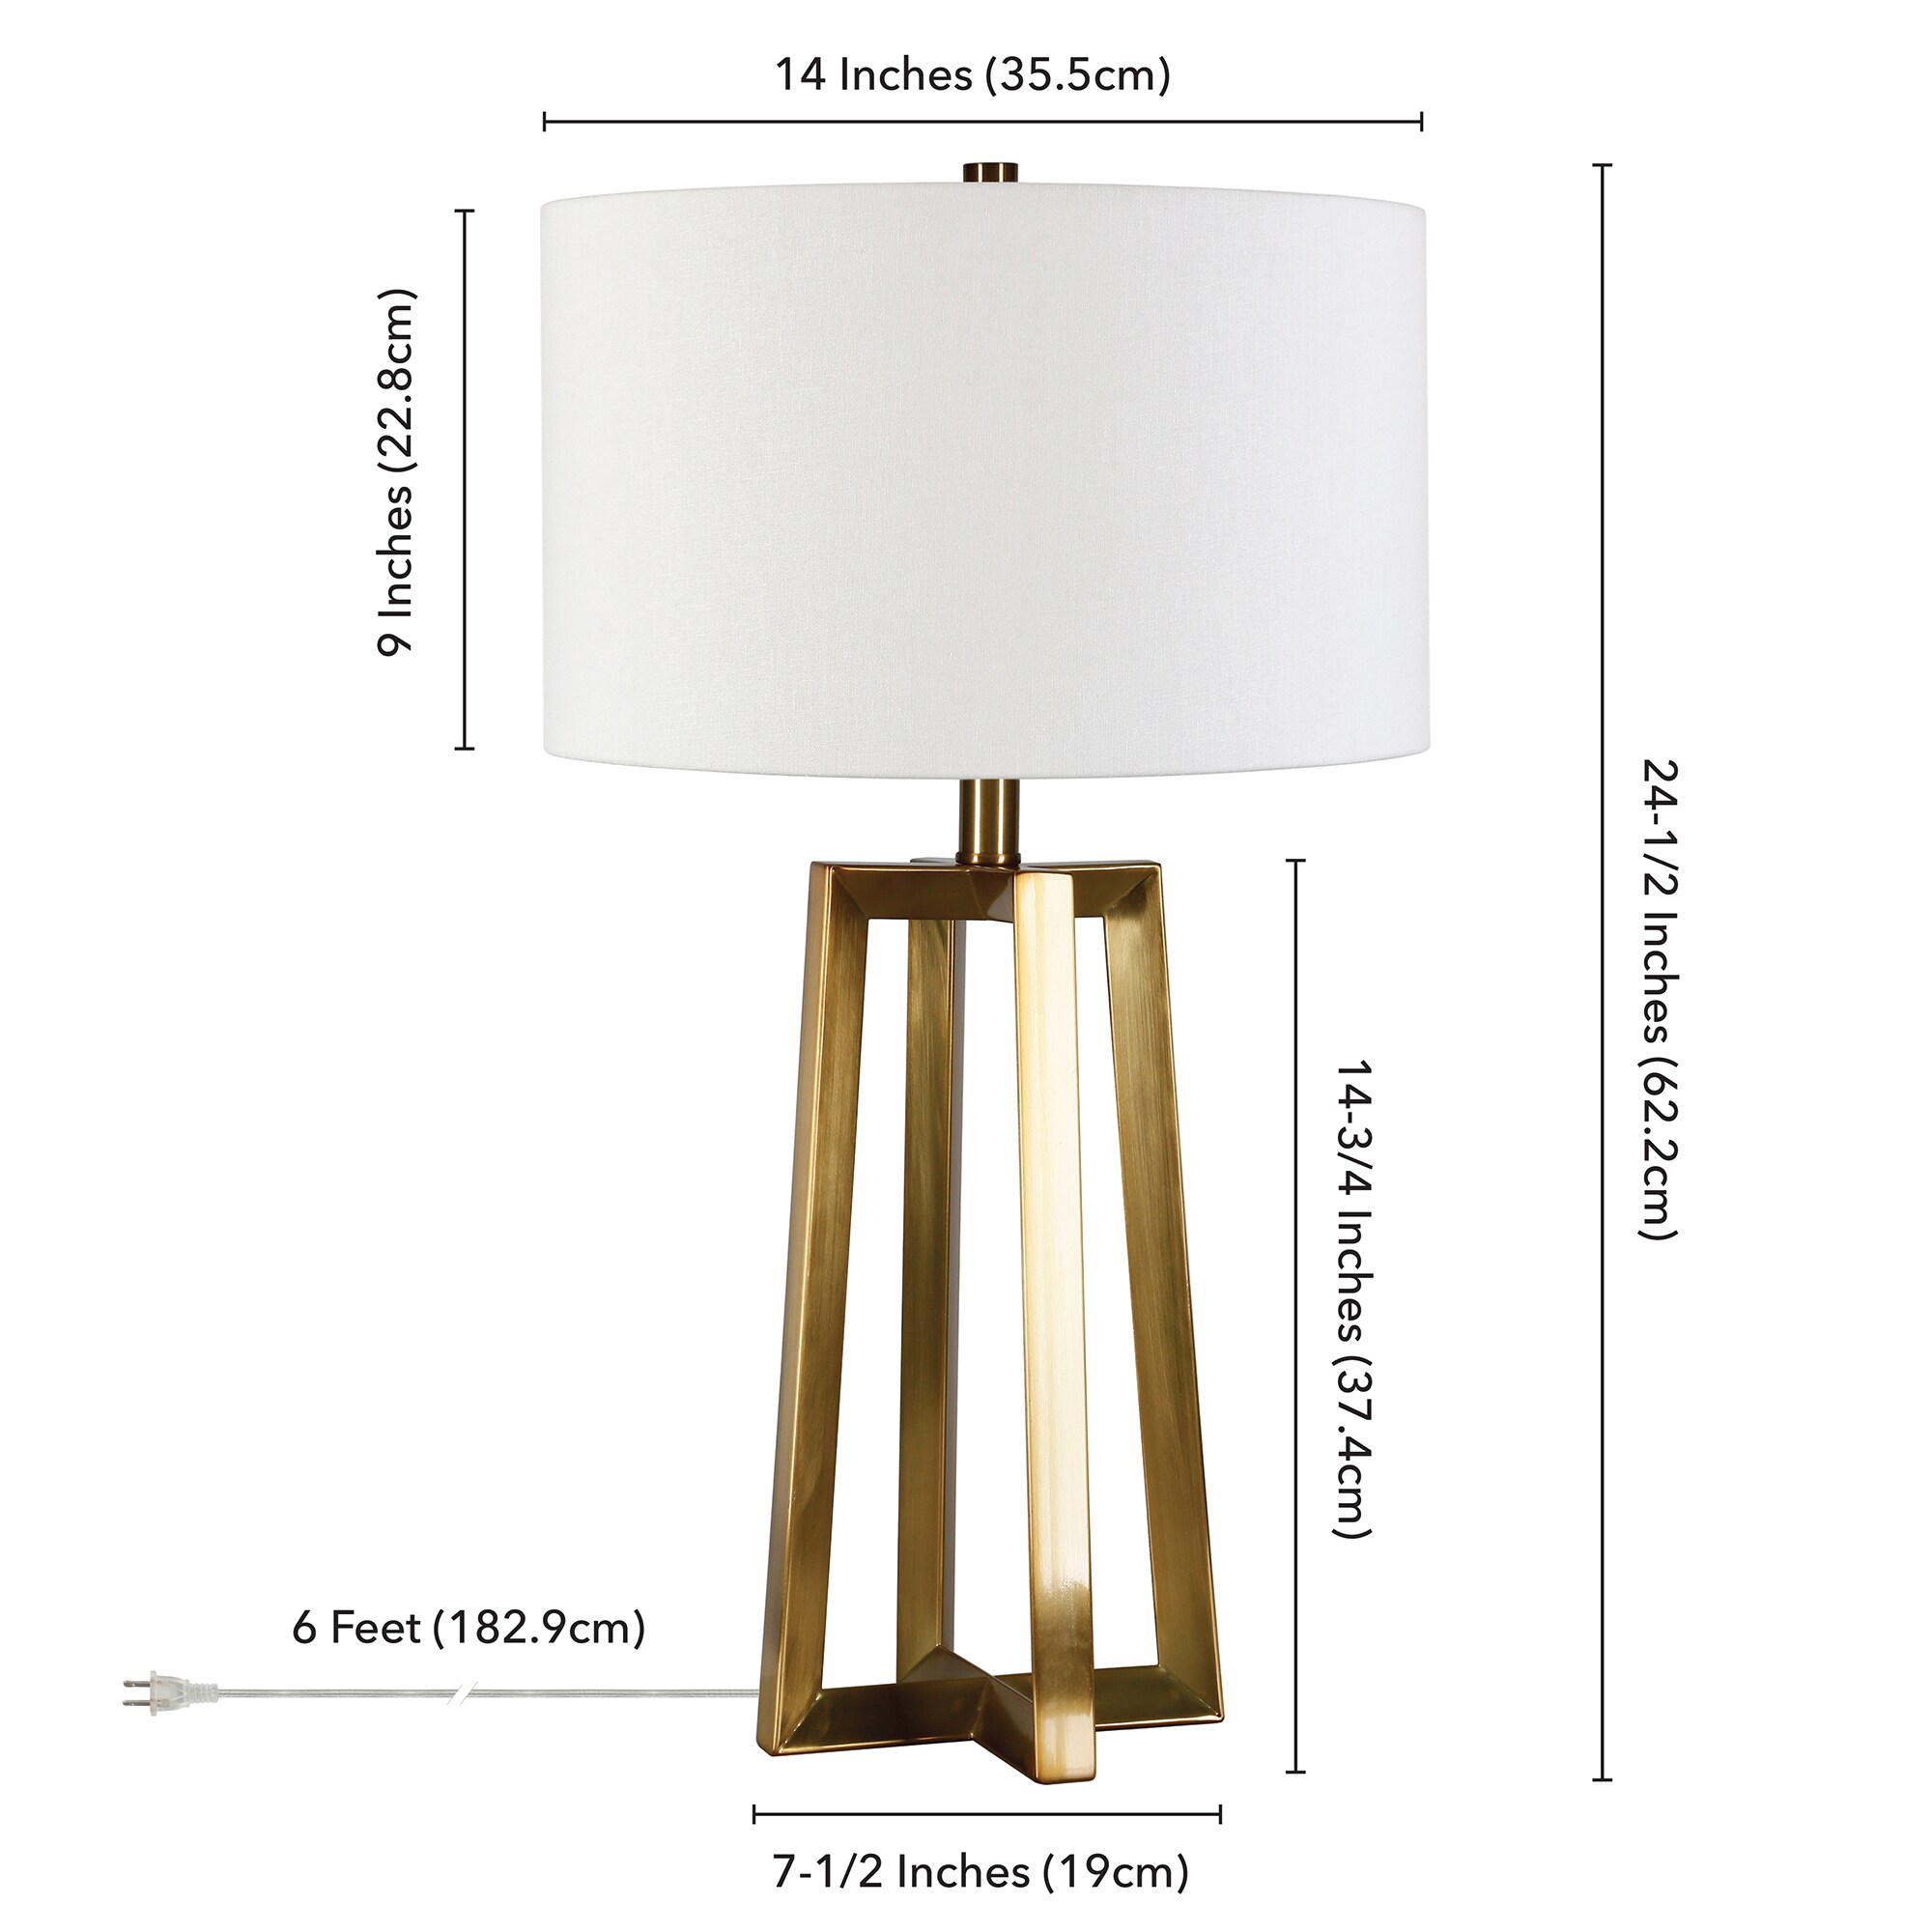 Simple Designs 14.4-in Antique Nickel/Green Downbridge Table Lamp